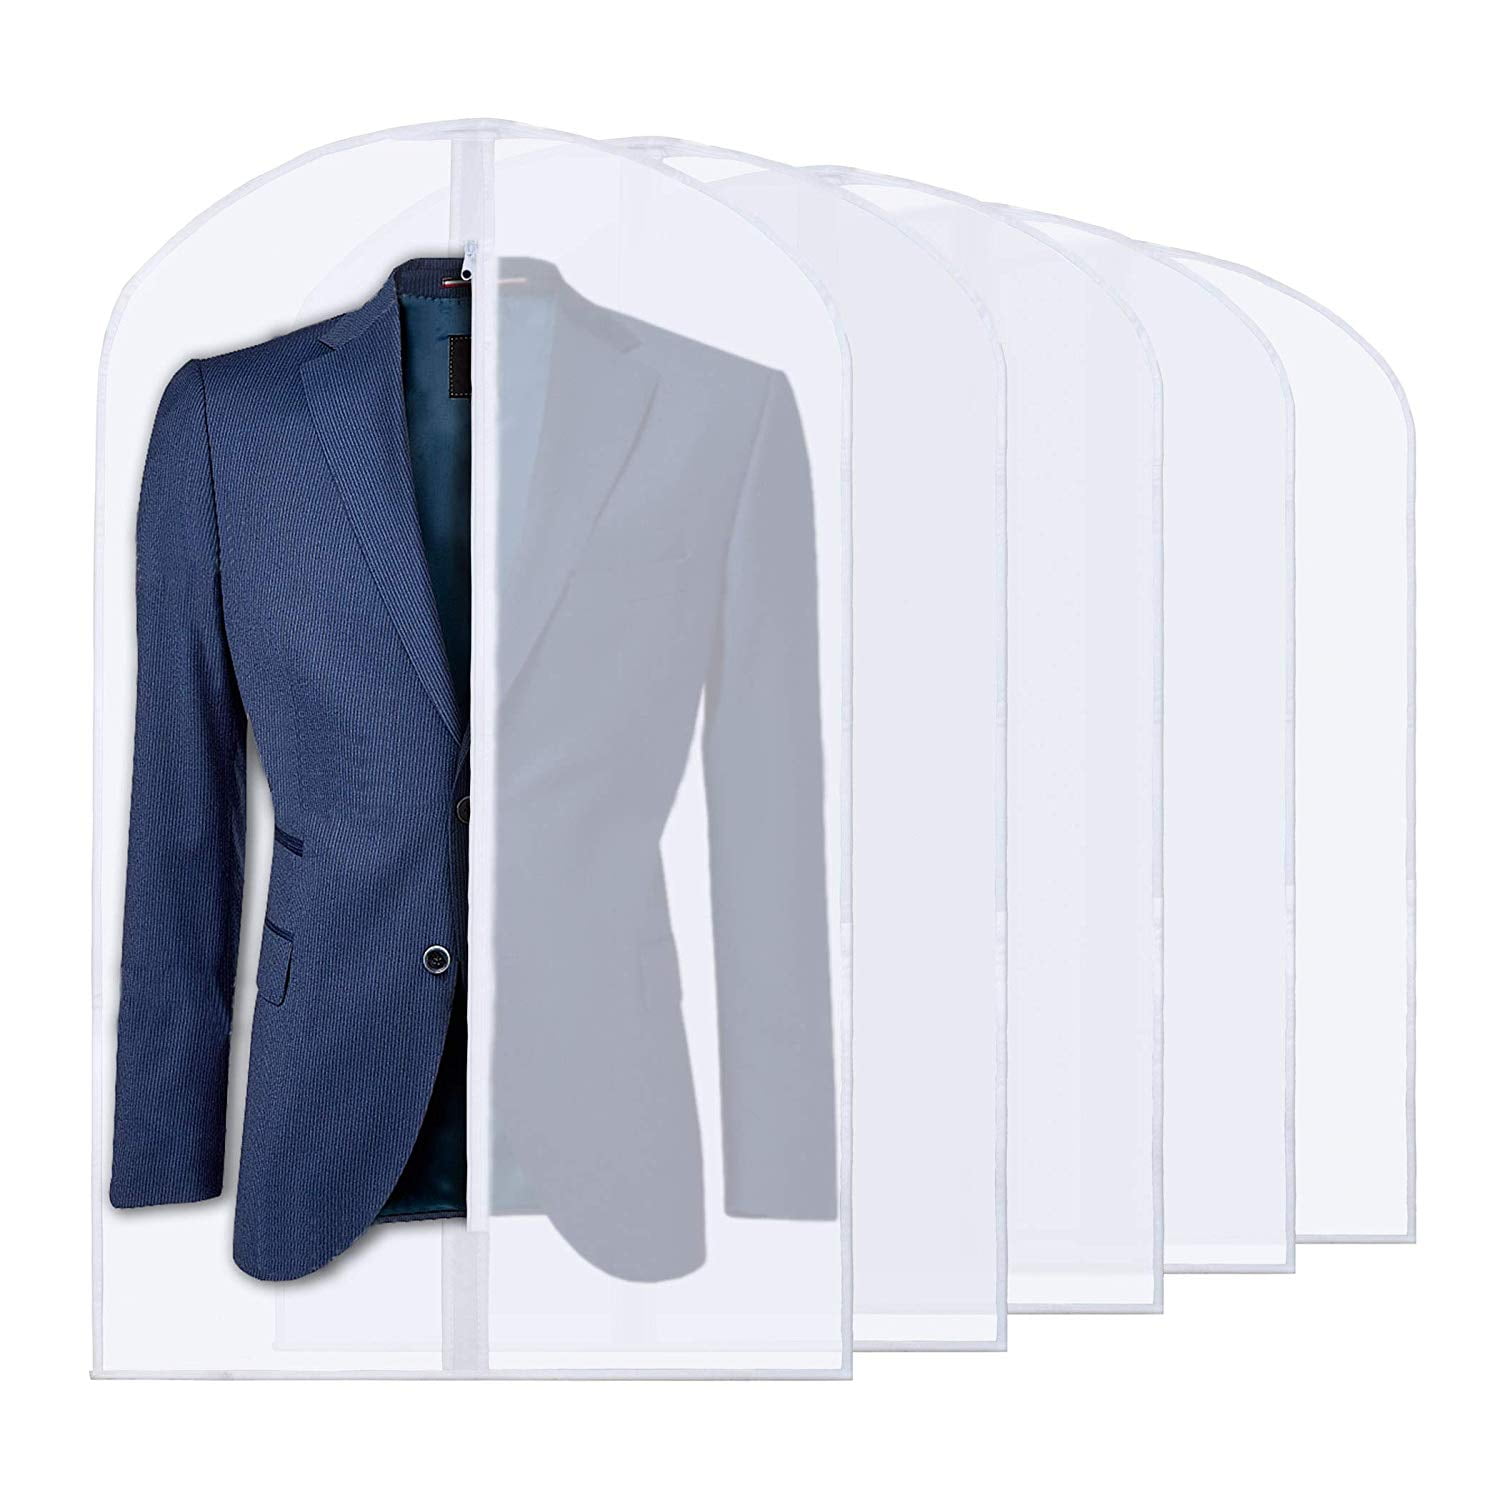 60" or 40" Long Garment Storage&Travel Bag Hanging Multiple Suit Coat Dress Gown 